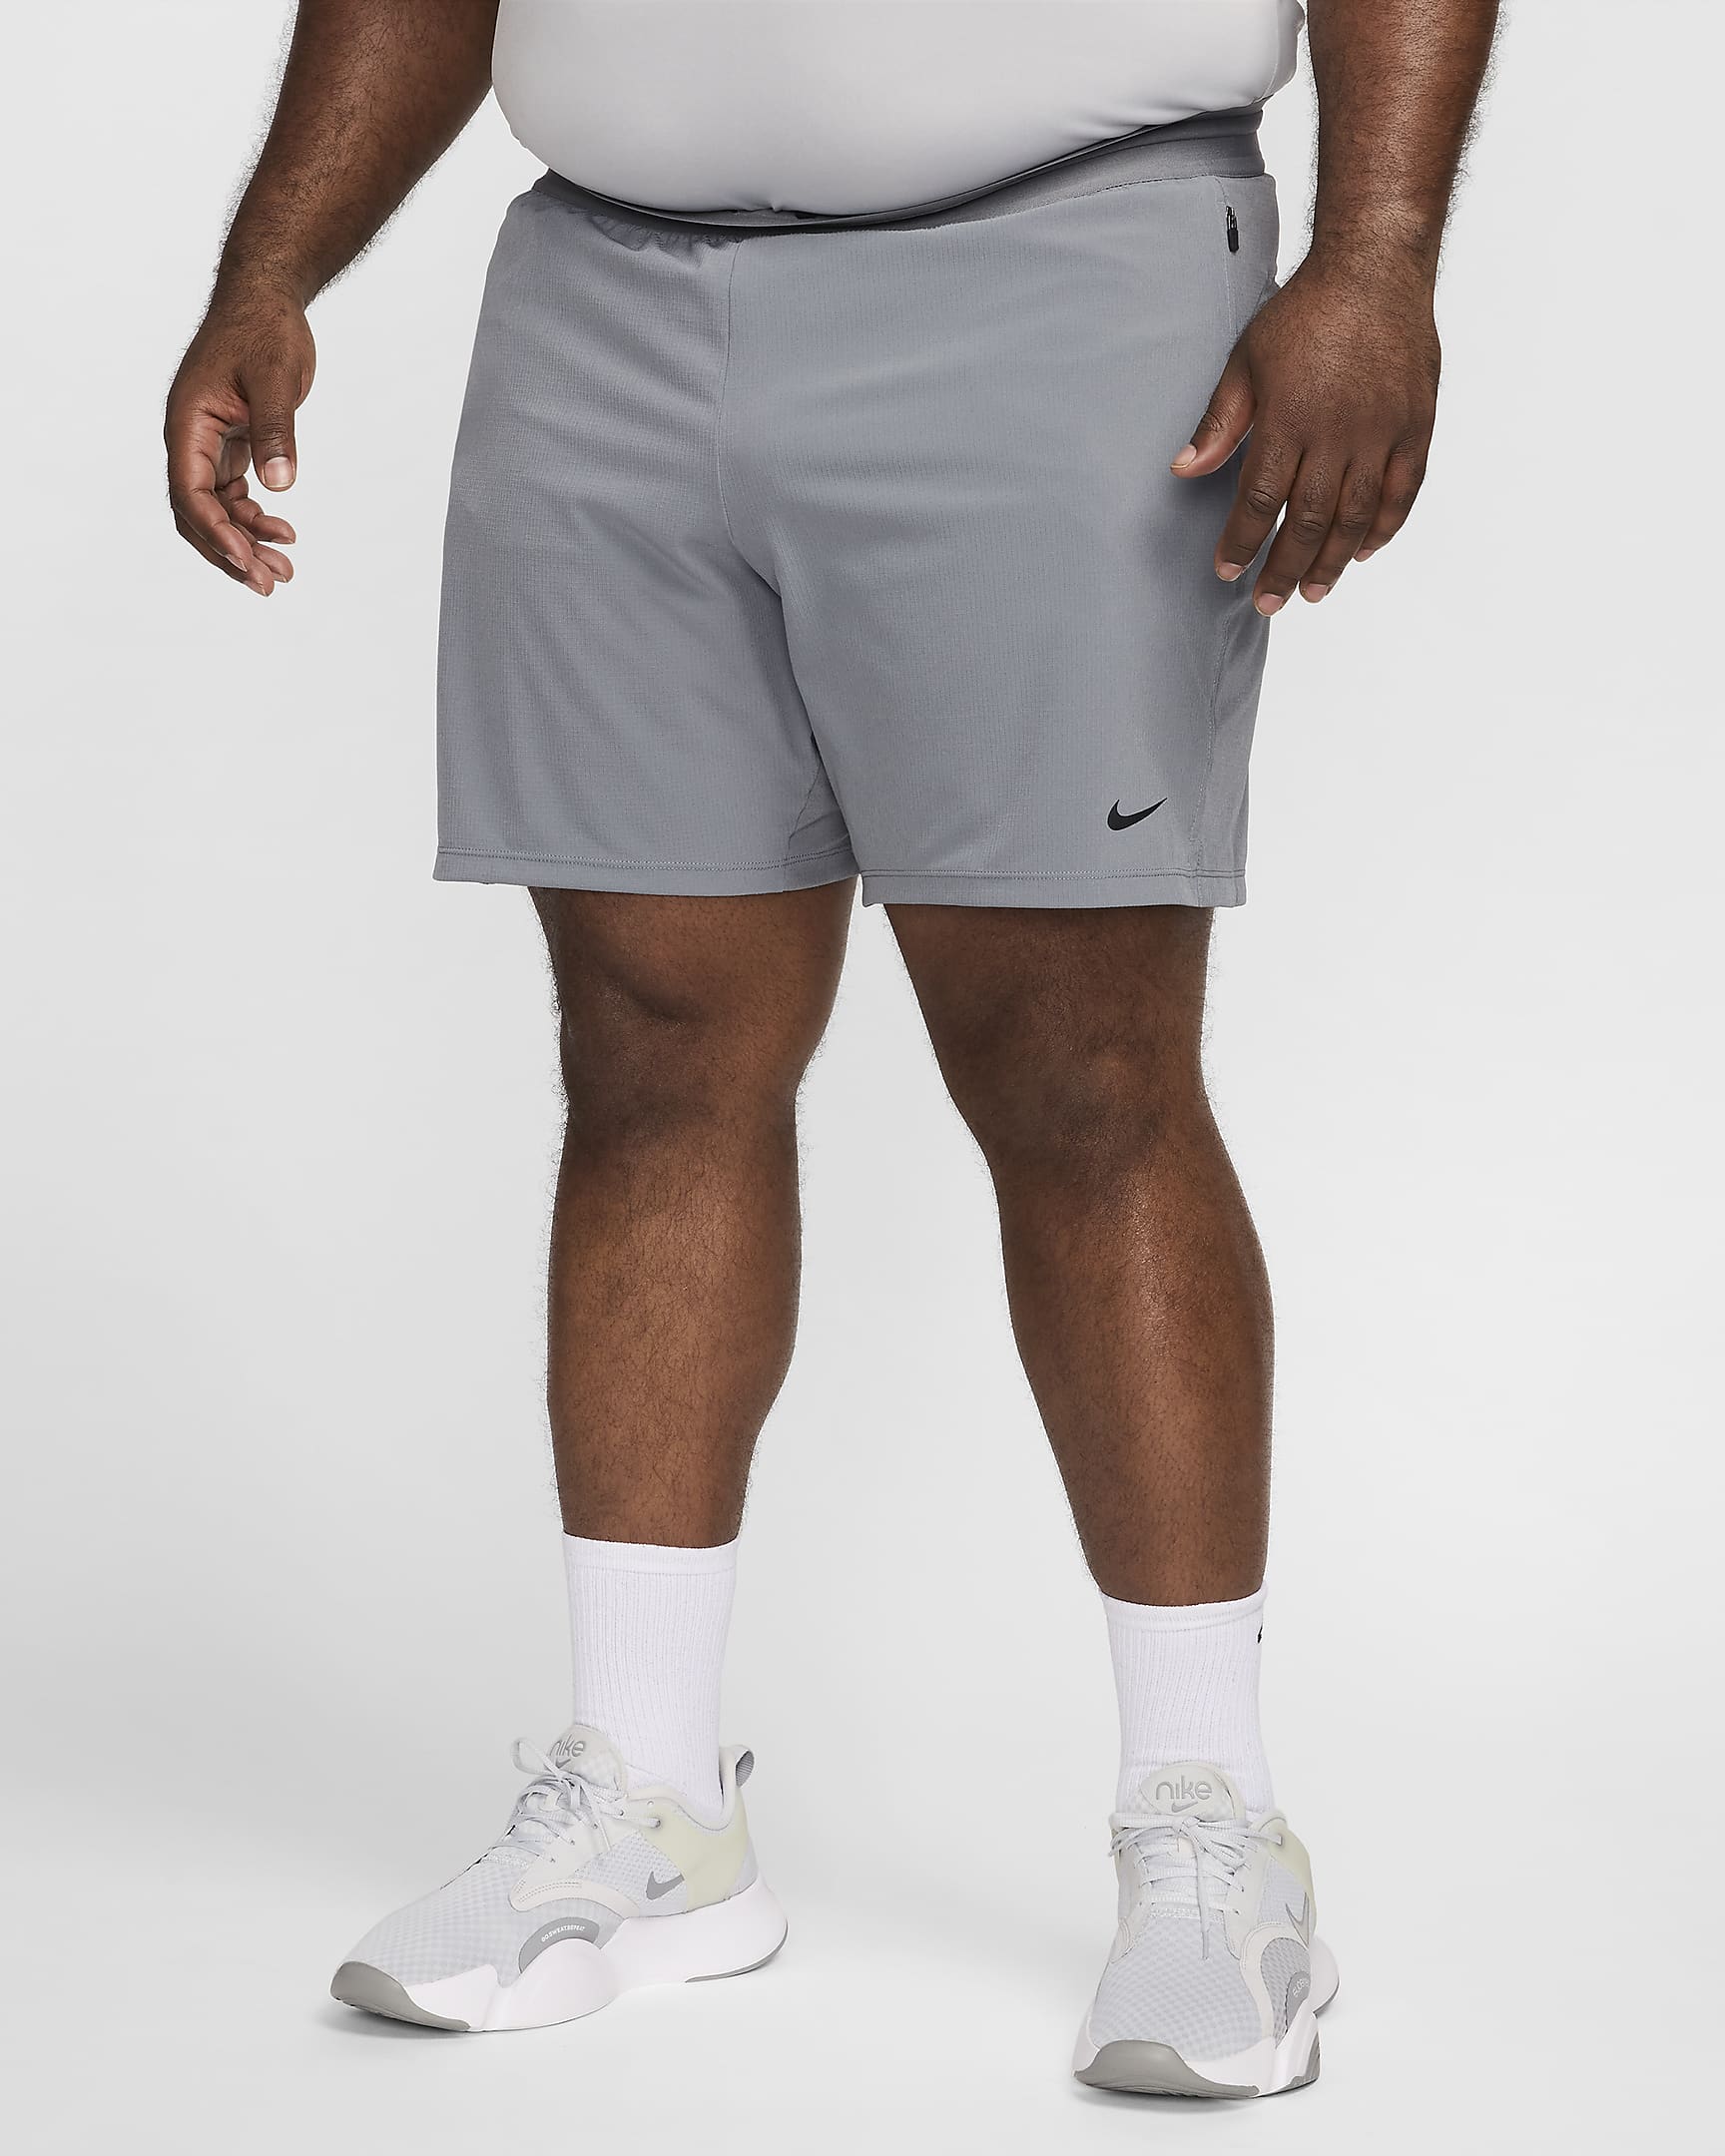 Nike Flex Rep 4.0 Men's Dri-FIT 18cm (approx.) Unlined Fitness Shorts - Smoke Grey/Black/Black